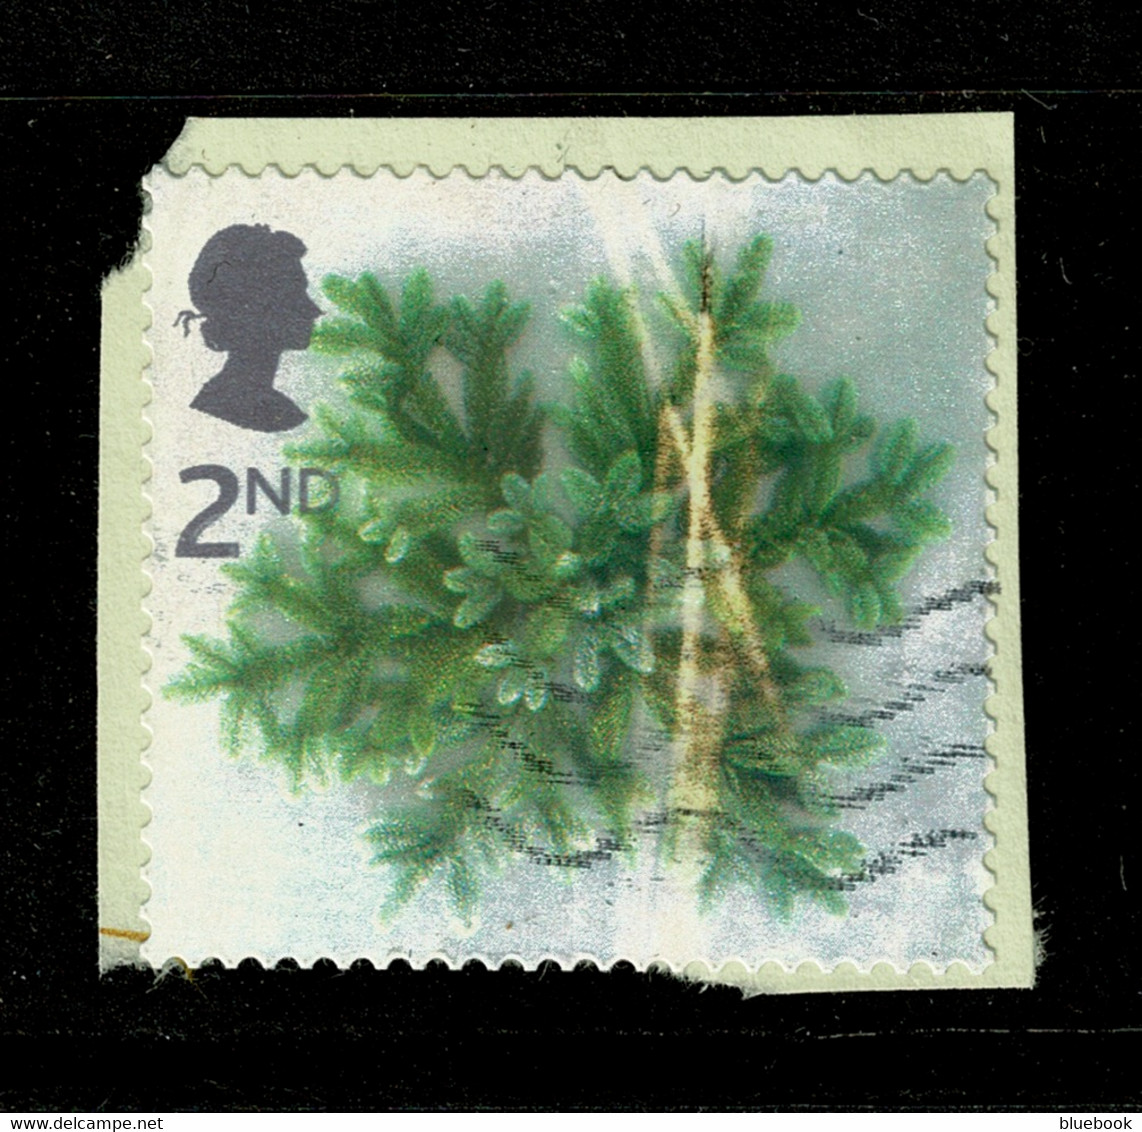 Ref 1485 - GB - 2nd Class 2002 Christmas Xmas Stamp - Major Printing Flaw Error - Variétés, Erreurs & Curiosités